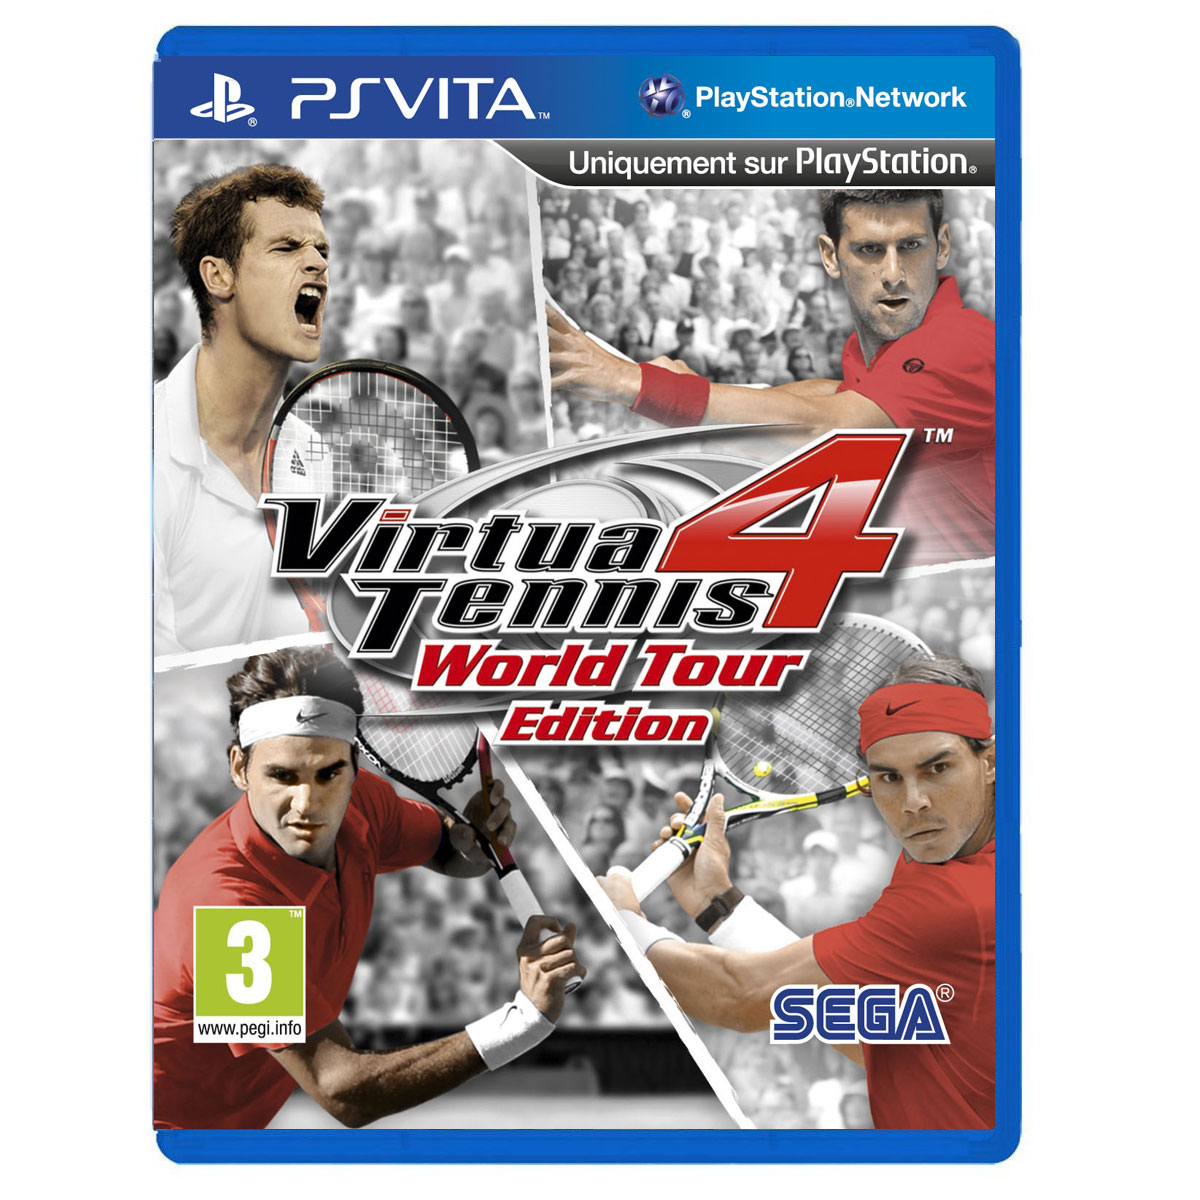 Virtua Tennis 4 World Tour